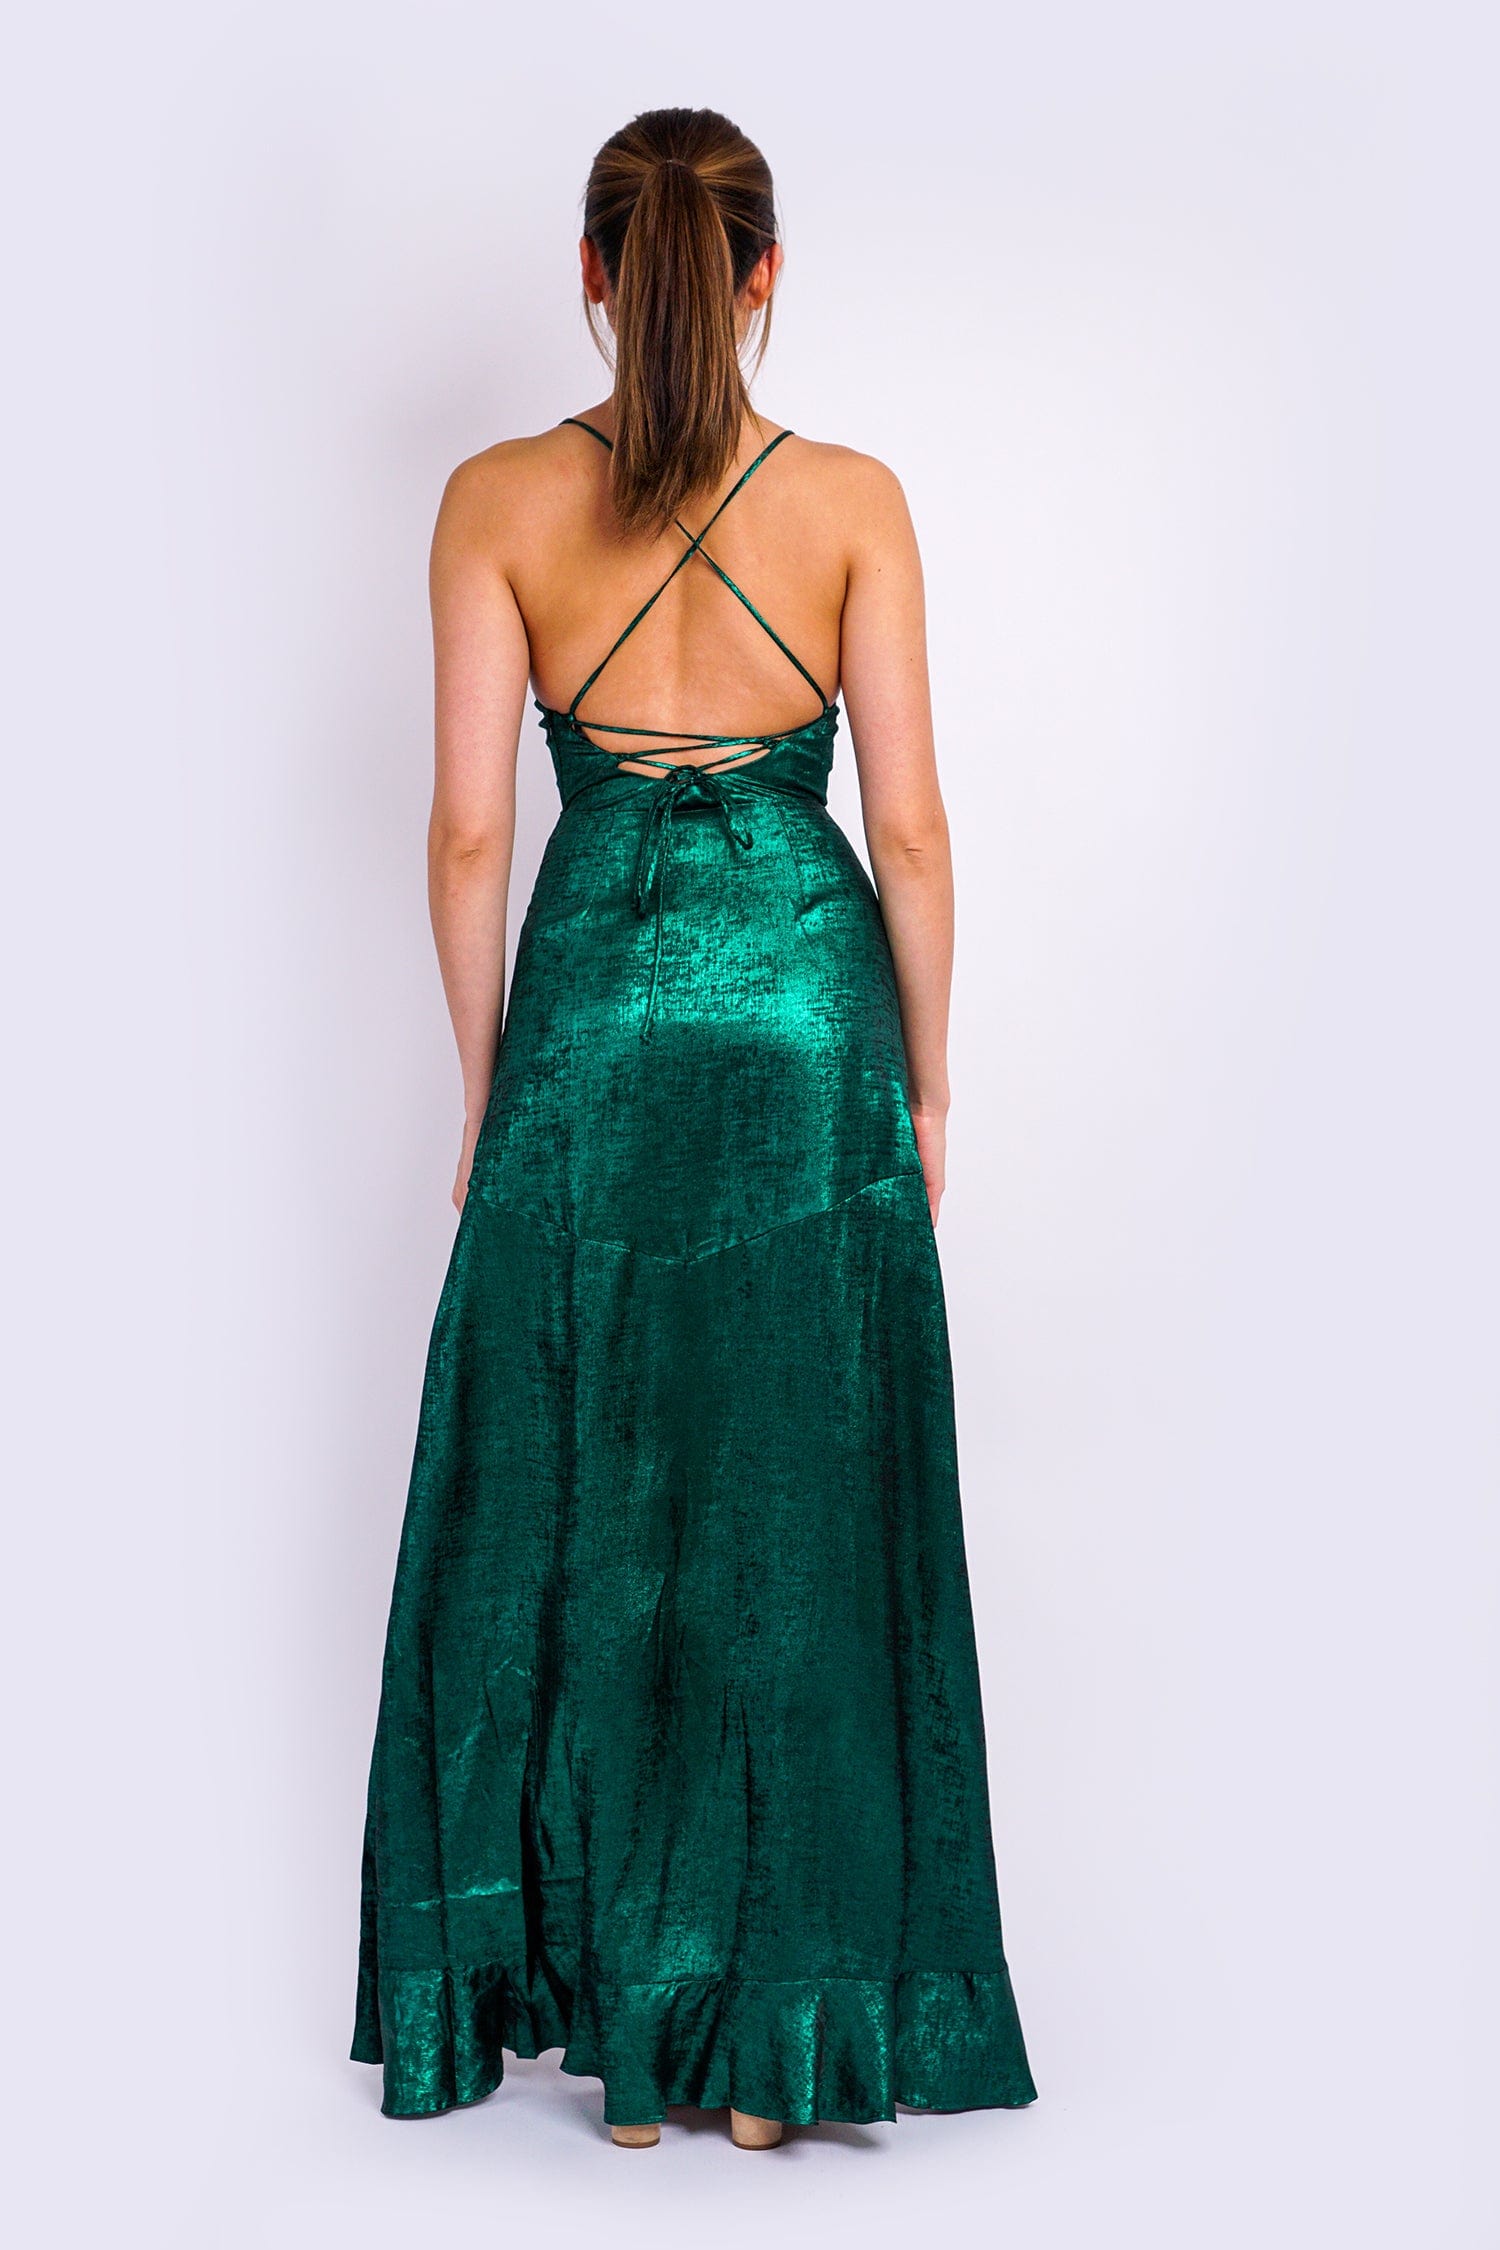 DCD DRESSES Emerald Ruffle Detail Maxi Dress